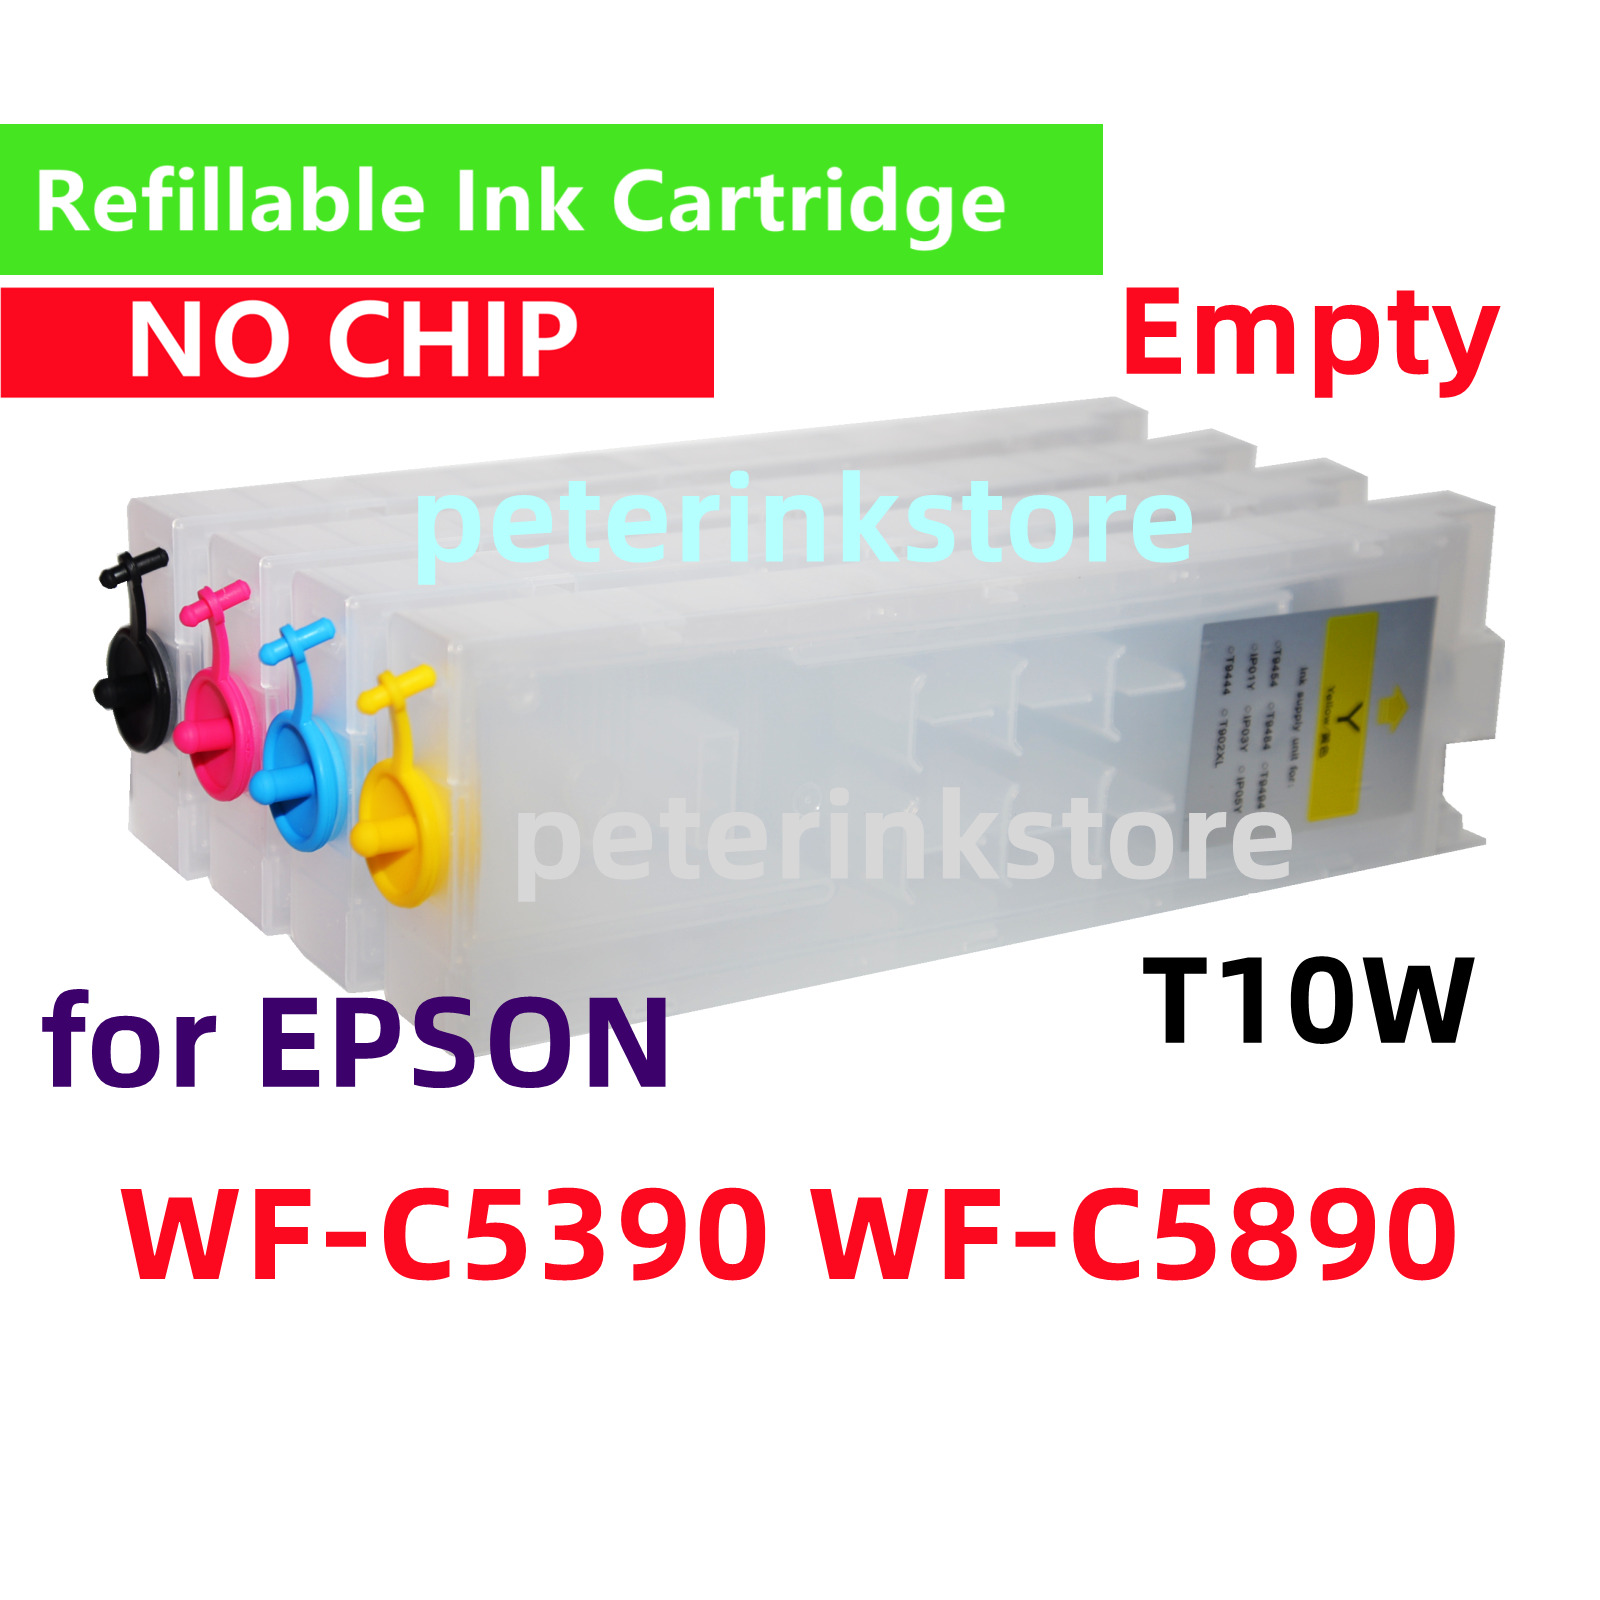 NOCHIP Refillable Ink Cartridge Pro WF-C5390 WF-C5890 Printer T10W T10S NOCHIP